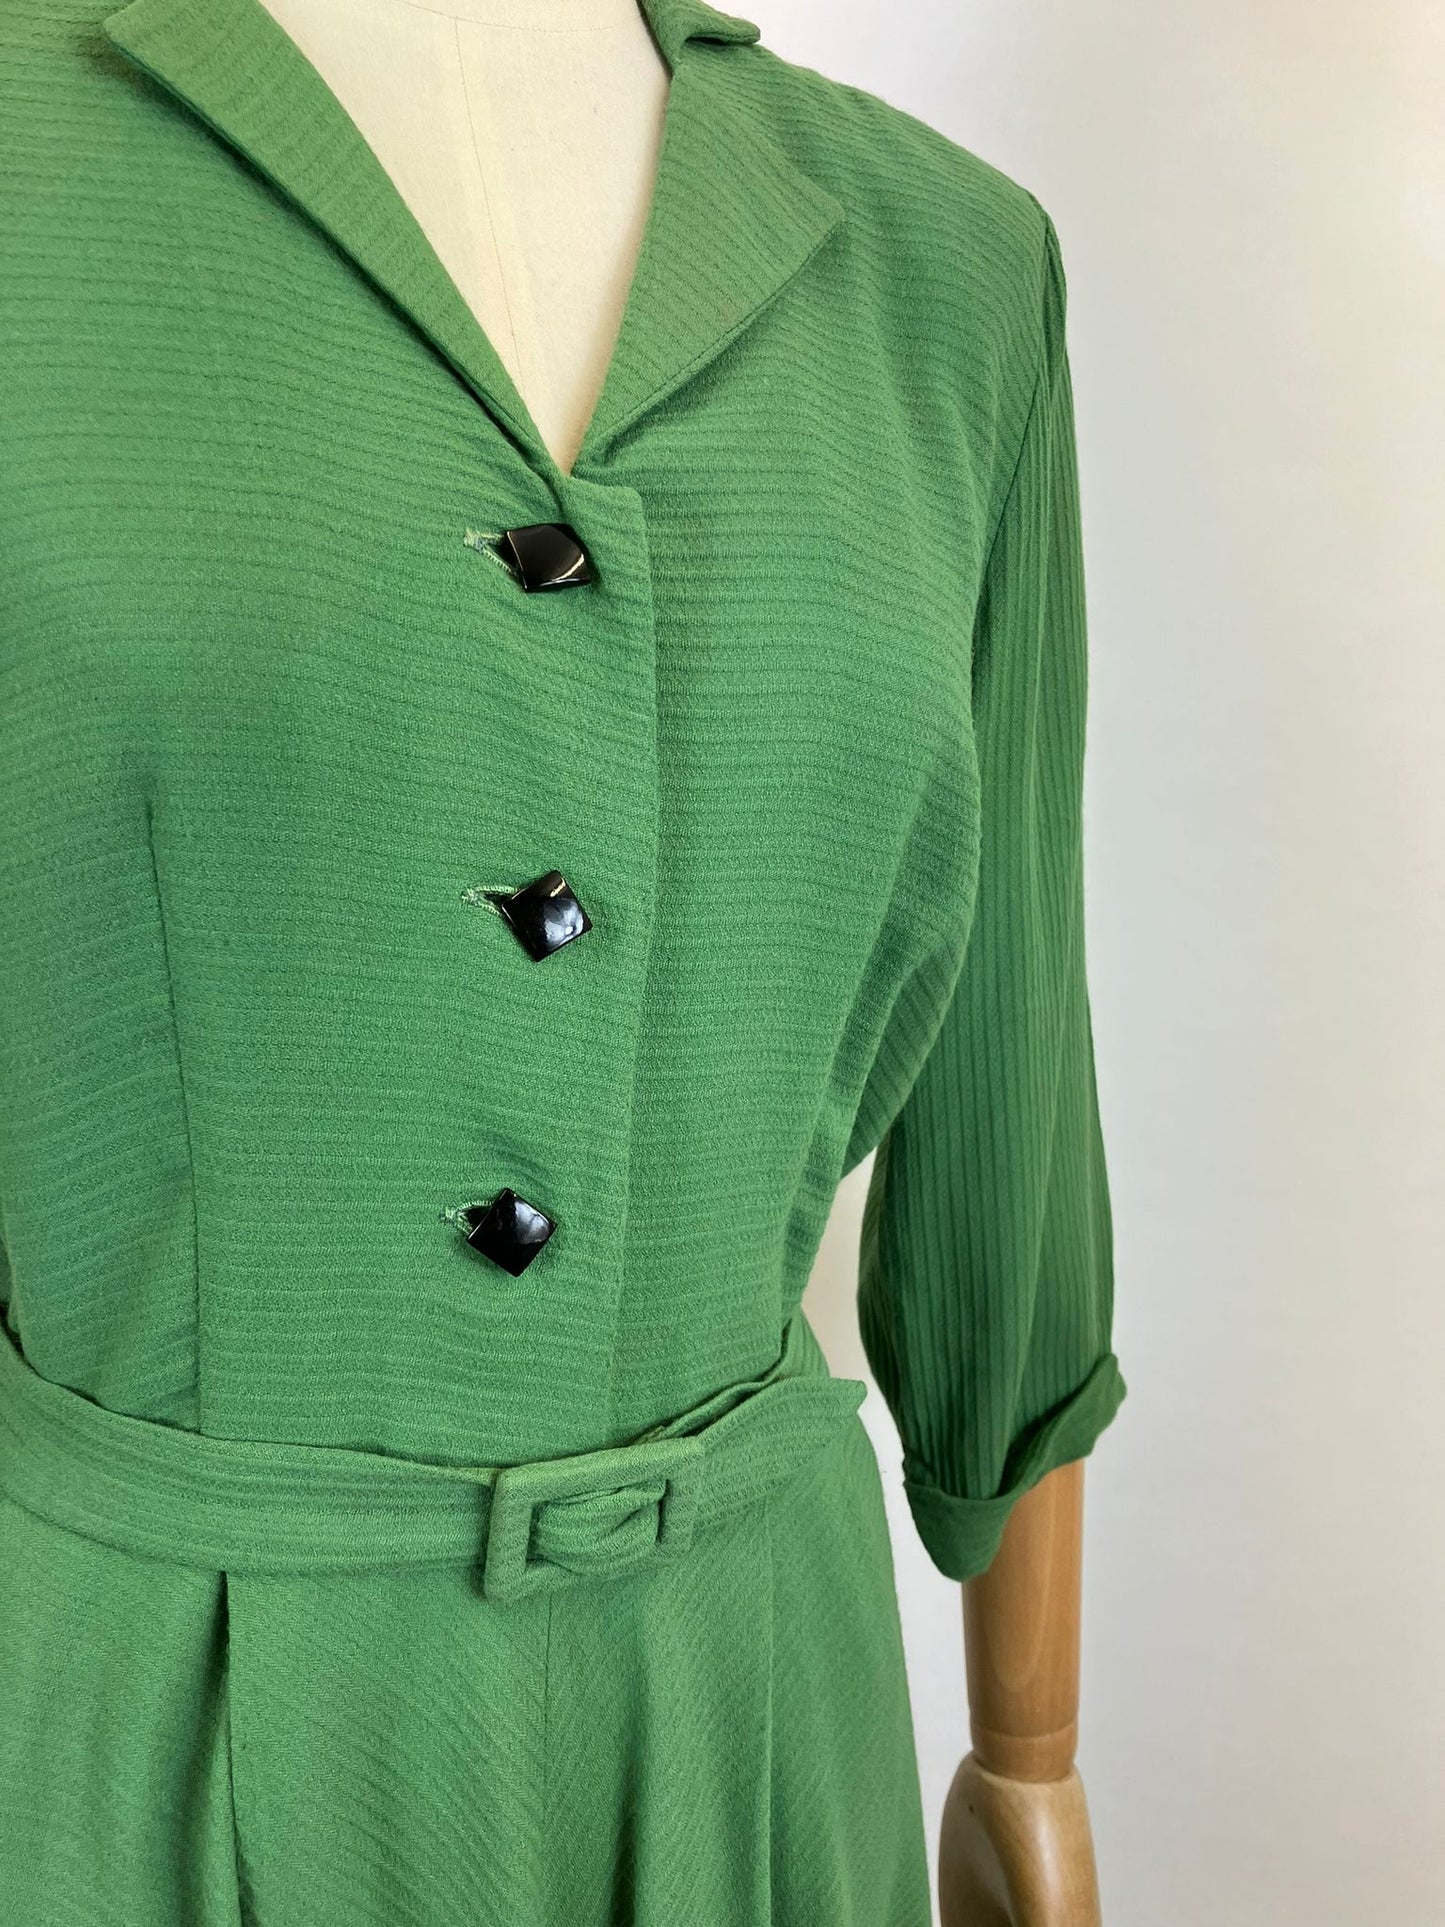 Original 1940’s Fabulous Dress - Emerald Green